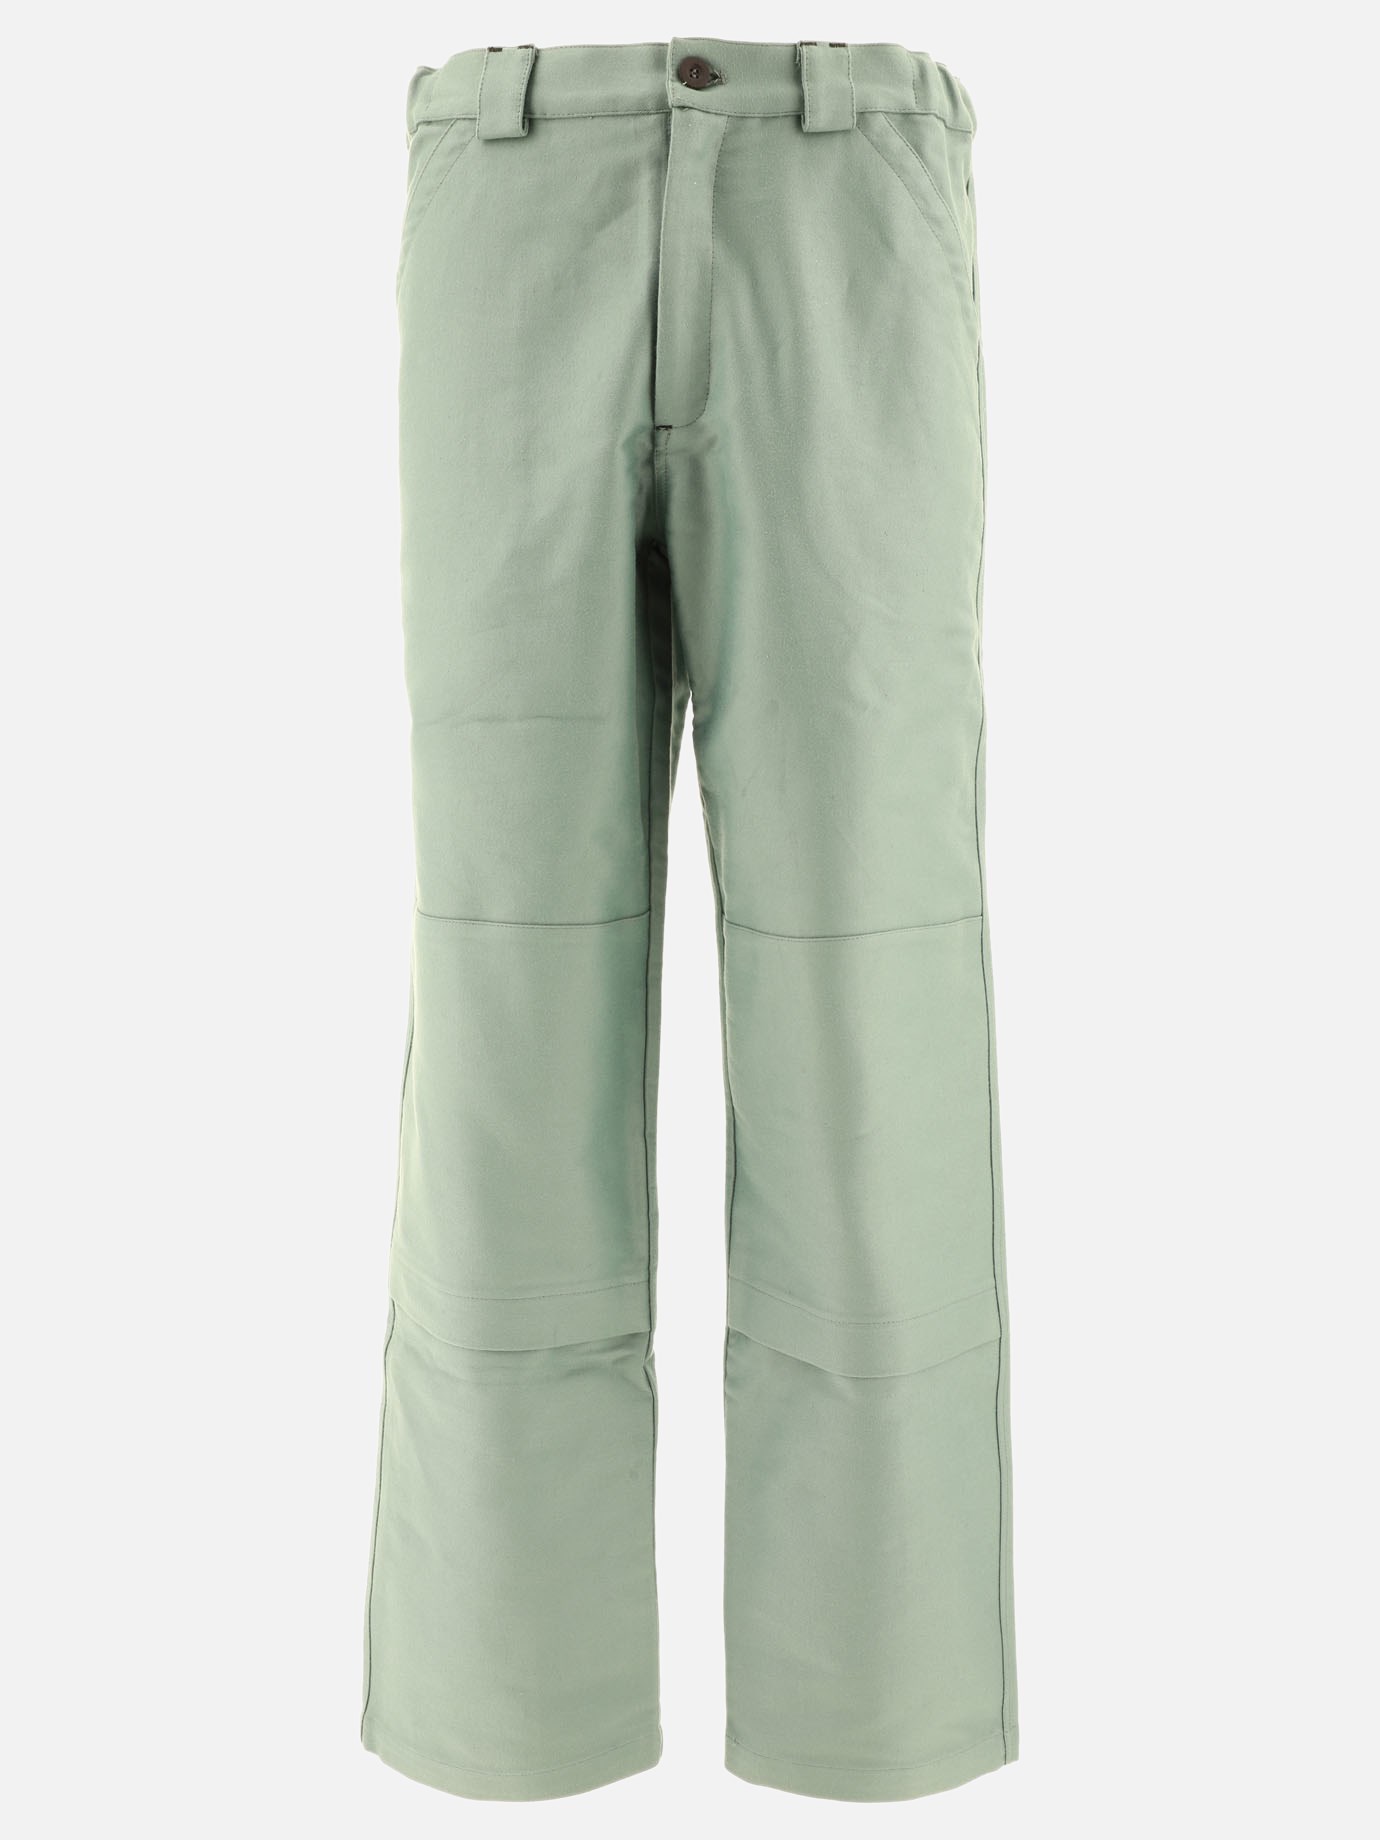 Pantaloni  Replicated Bold Fustian by Gr10K - 1